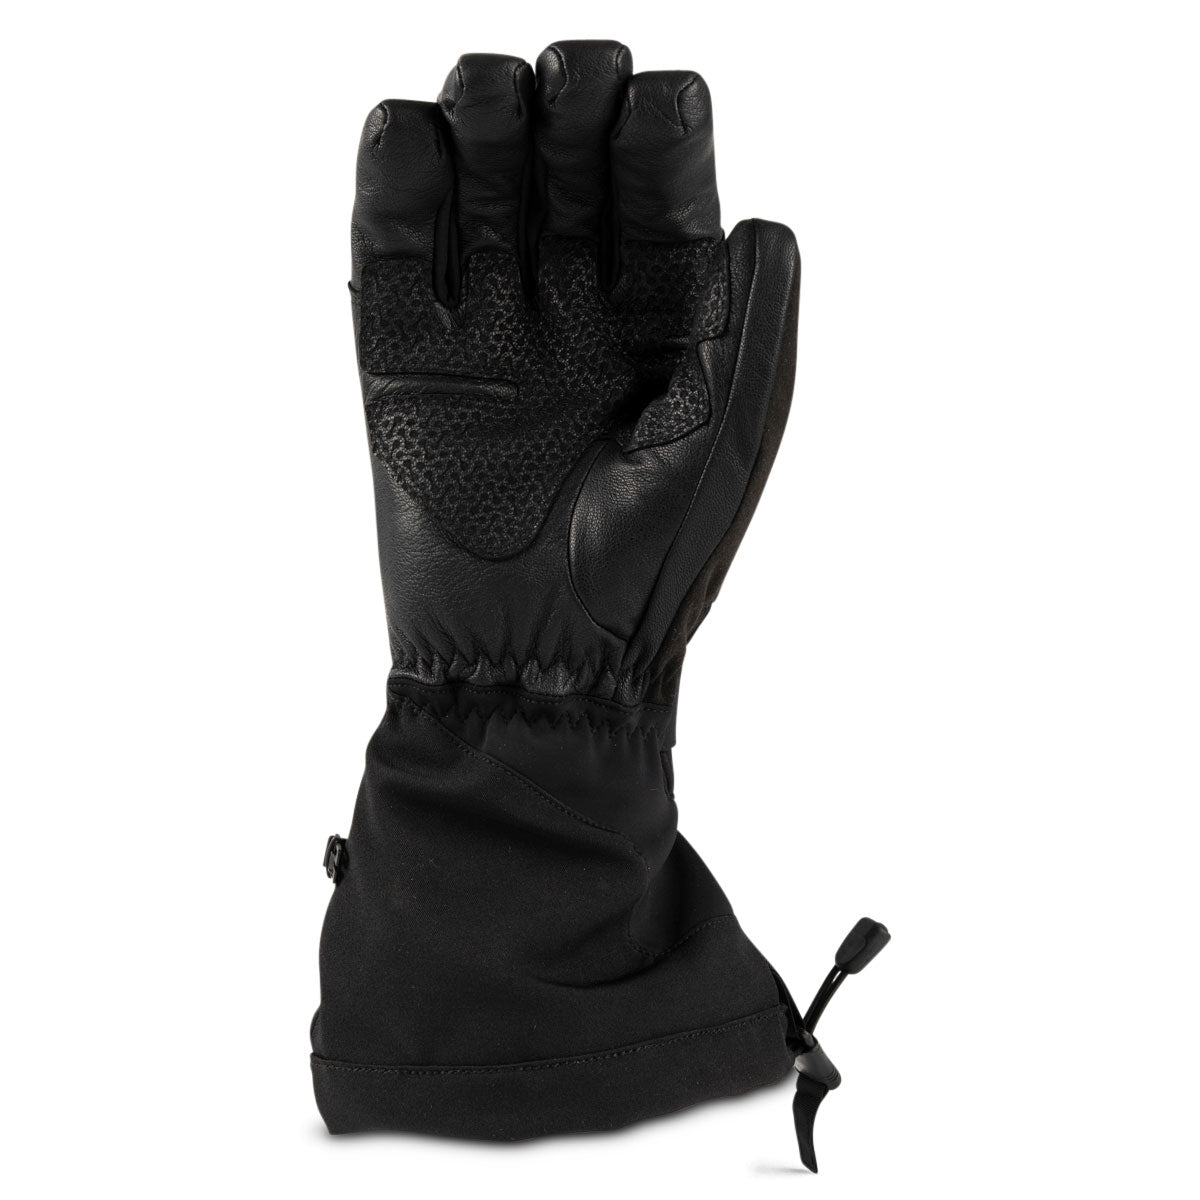 Backcountry Gloves